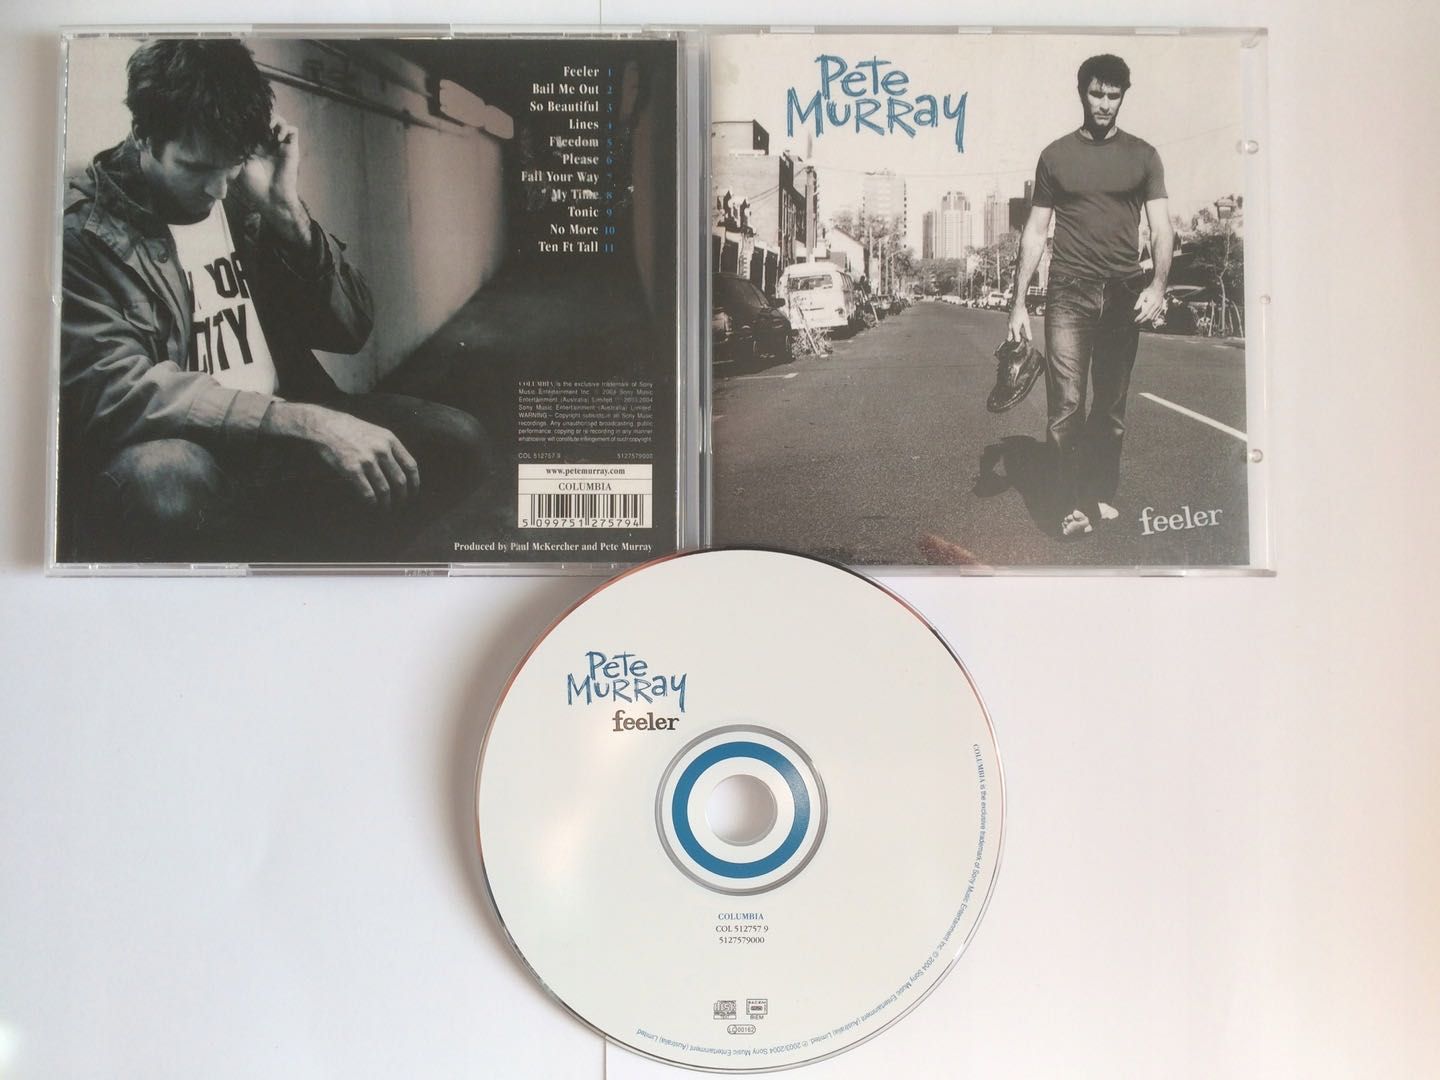 Pete Murray - feeler (CD)